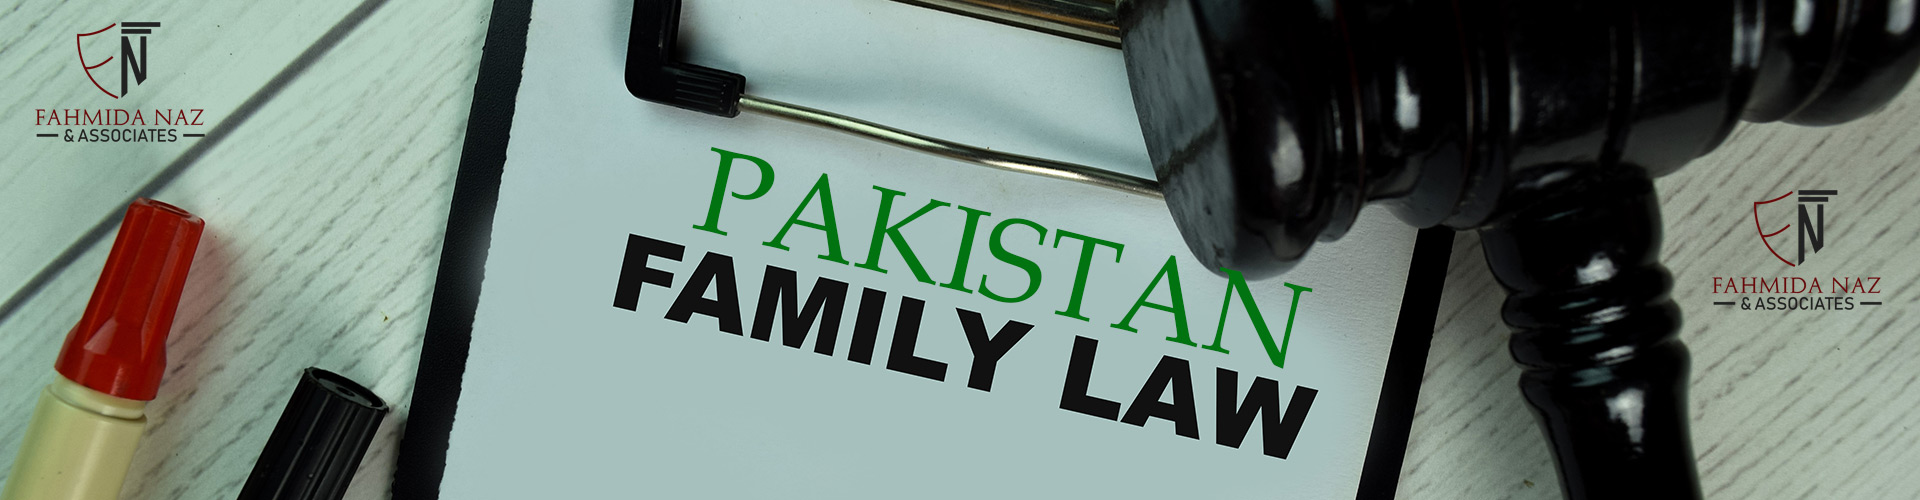 Pakistani Family Maintenance Laws